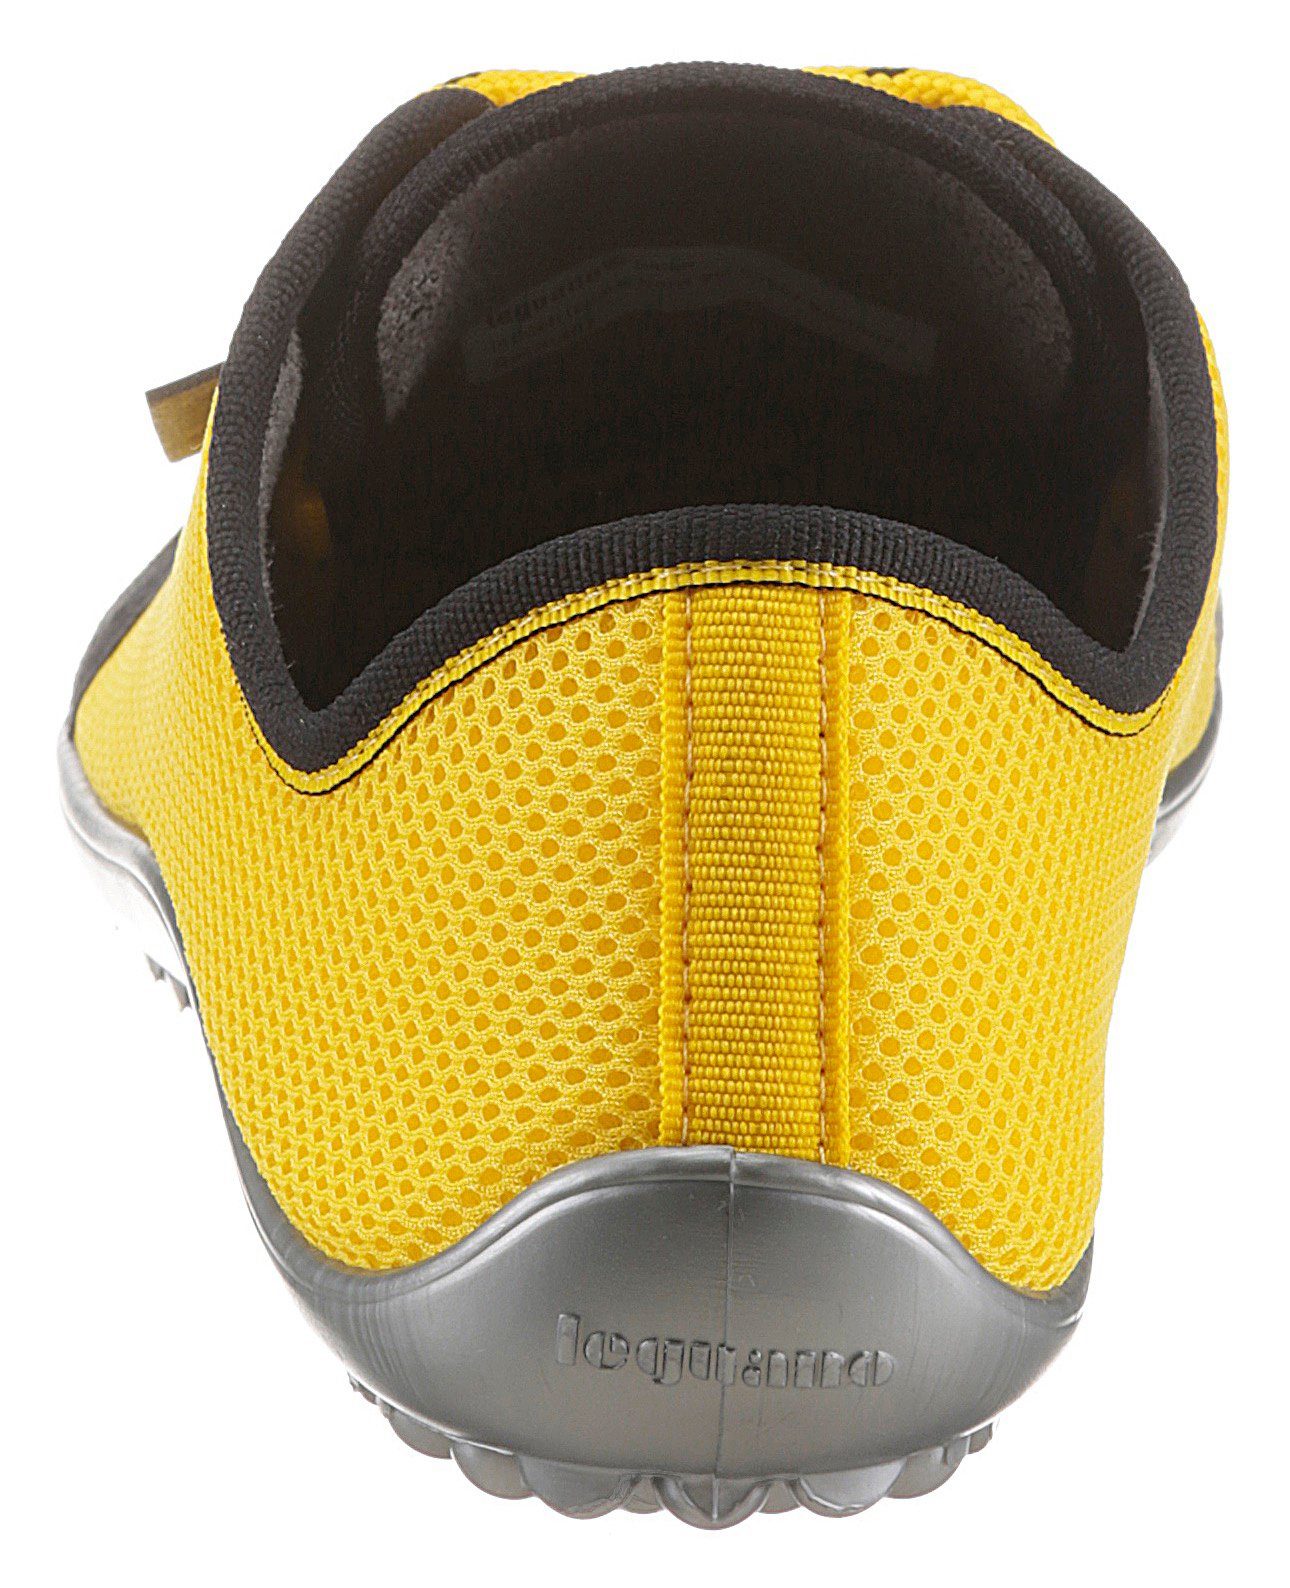 ergonomischer AKTIV Barfußschuh gelb mit Formgebung Leguano